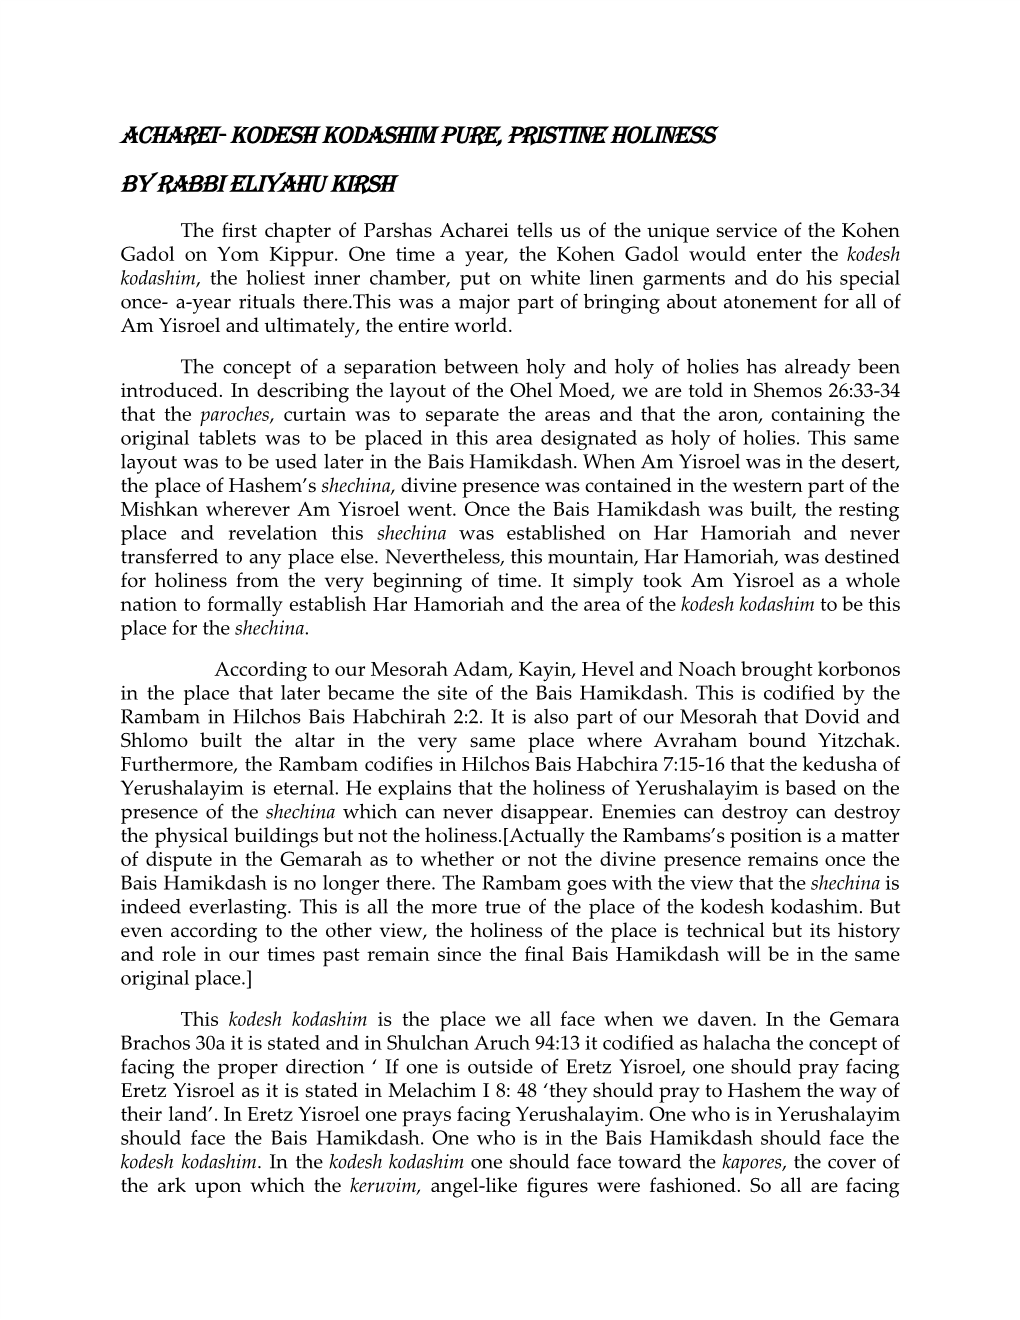 Acharei- Kodesh Kodashim Pure, Pristine Holiness by Rabbi Eliyahu